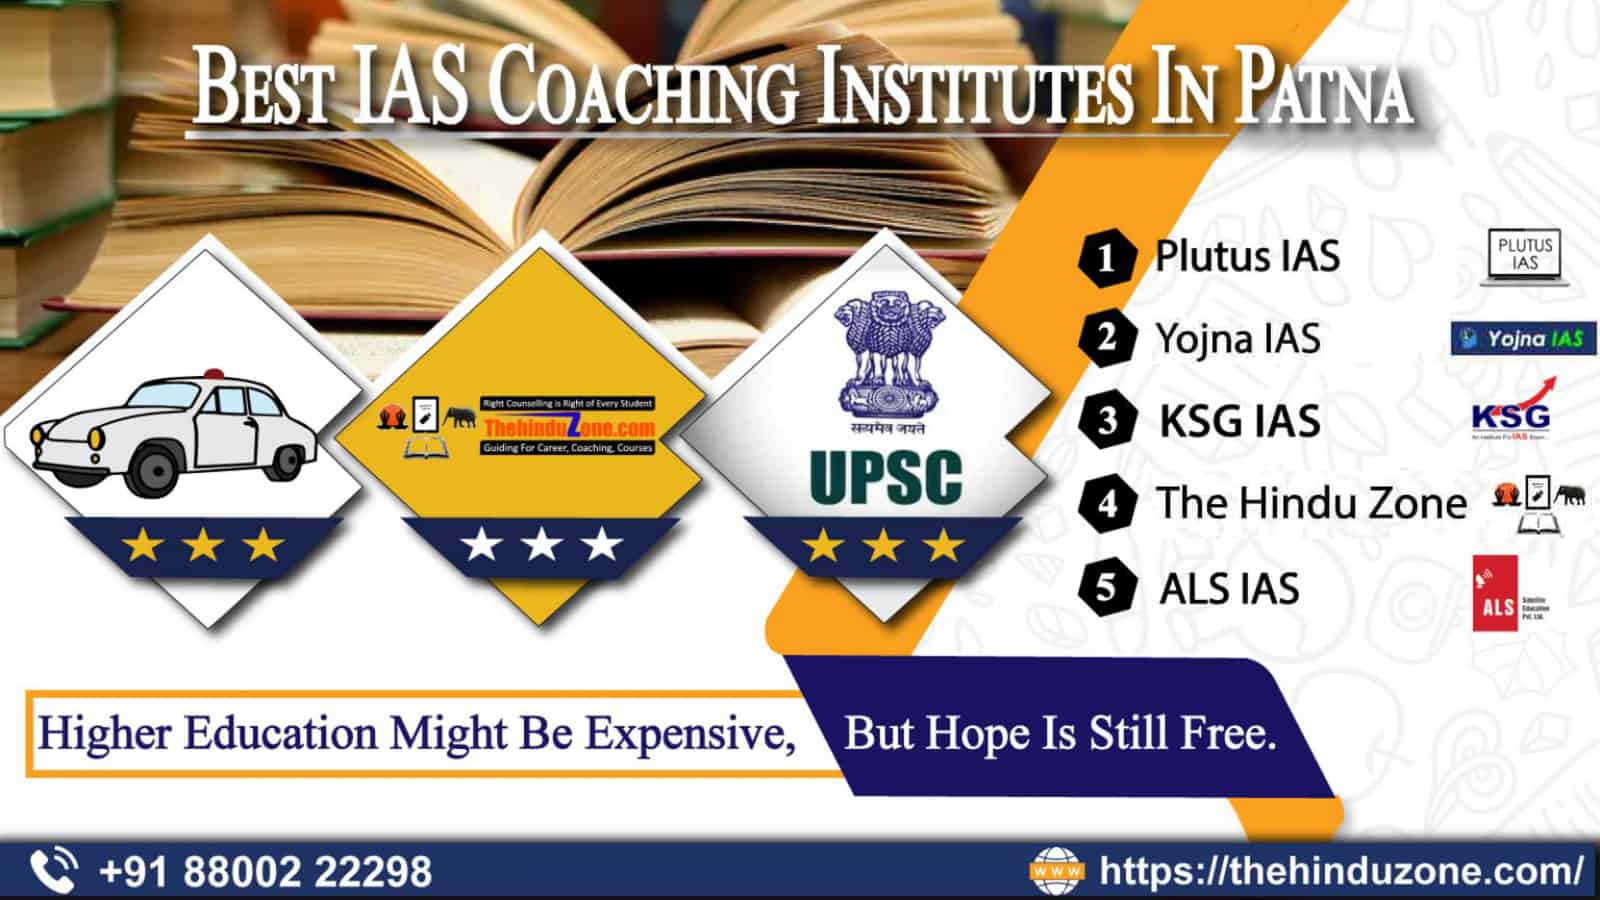 Best IAS Coaching Institutes in Patna